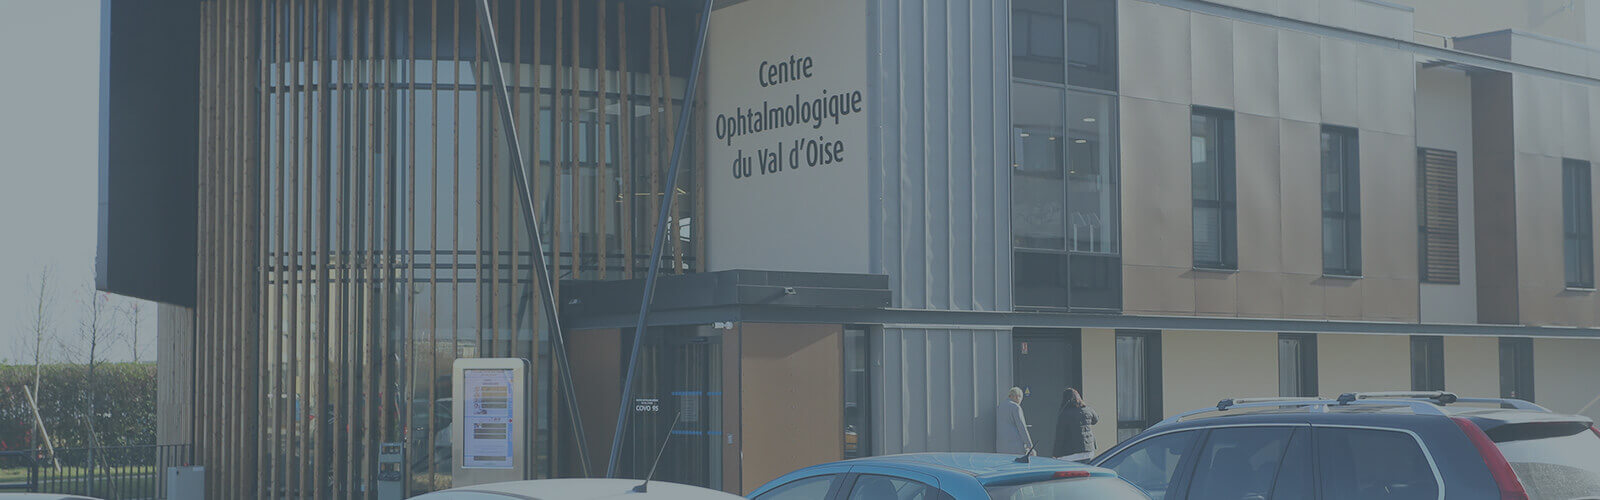 Centre d'ophtalmologie COVO 95